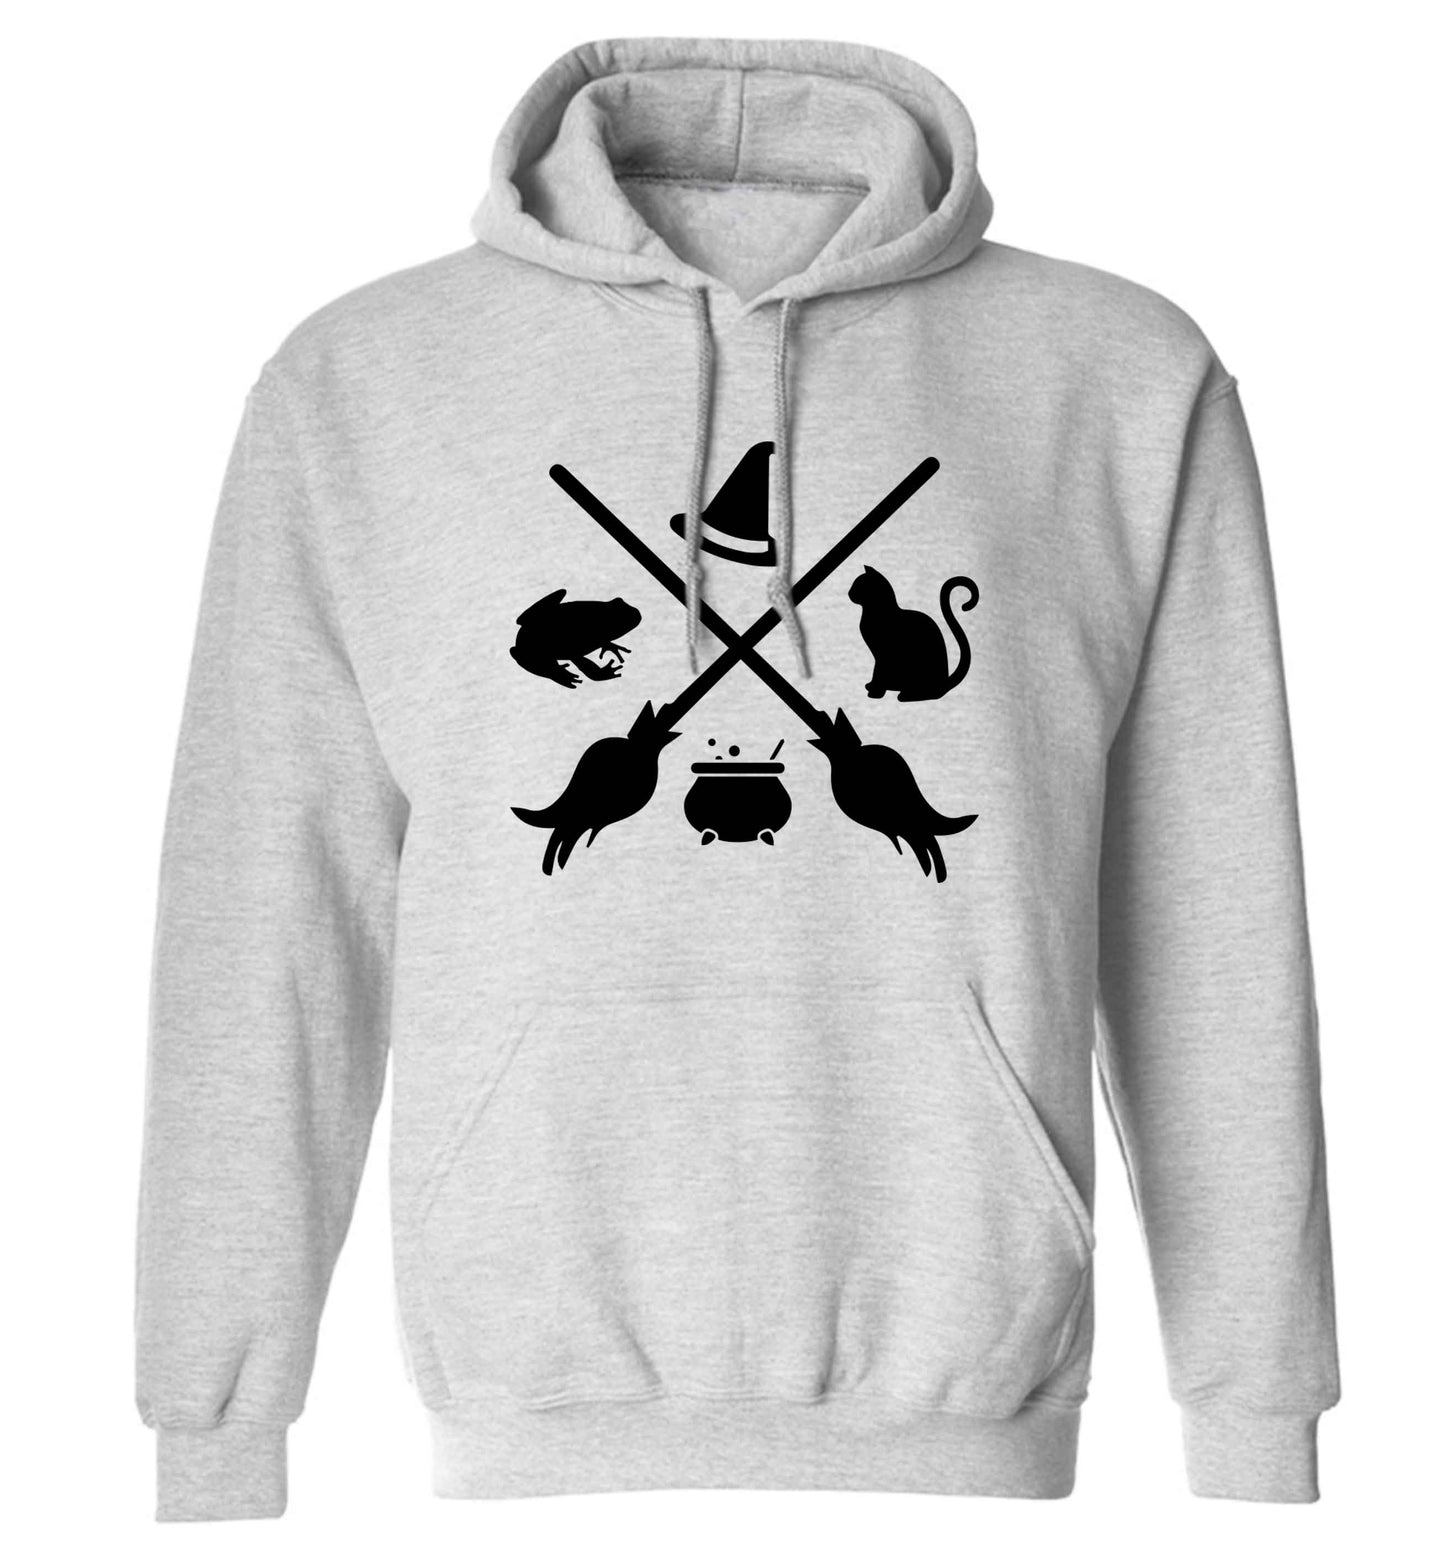 Witch symbol adults unisex grey hoodie 2XL